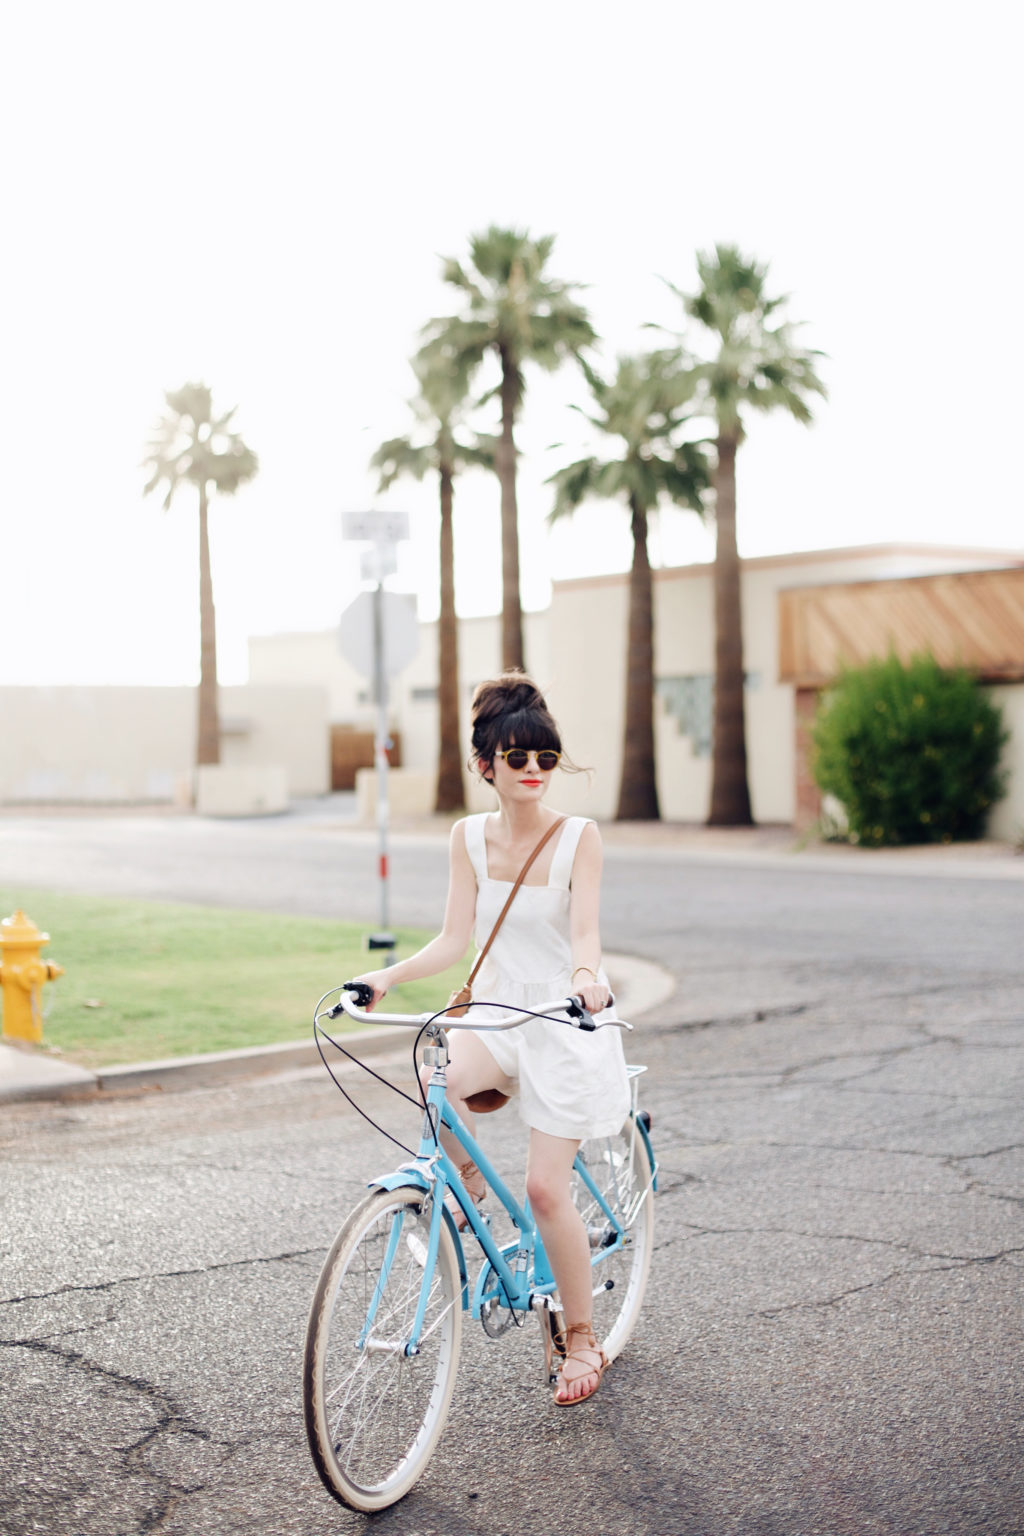 New Darlings - Summer - Bike Riding